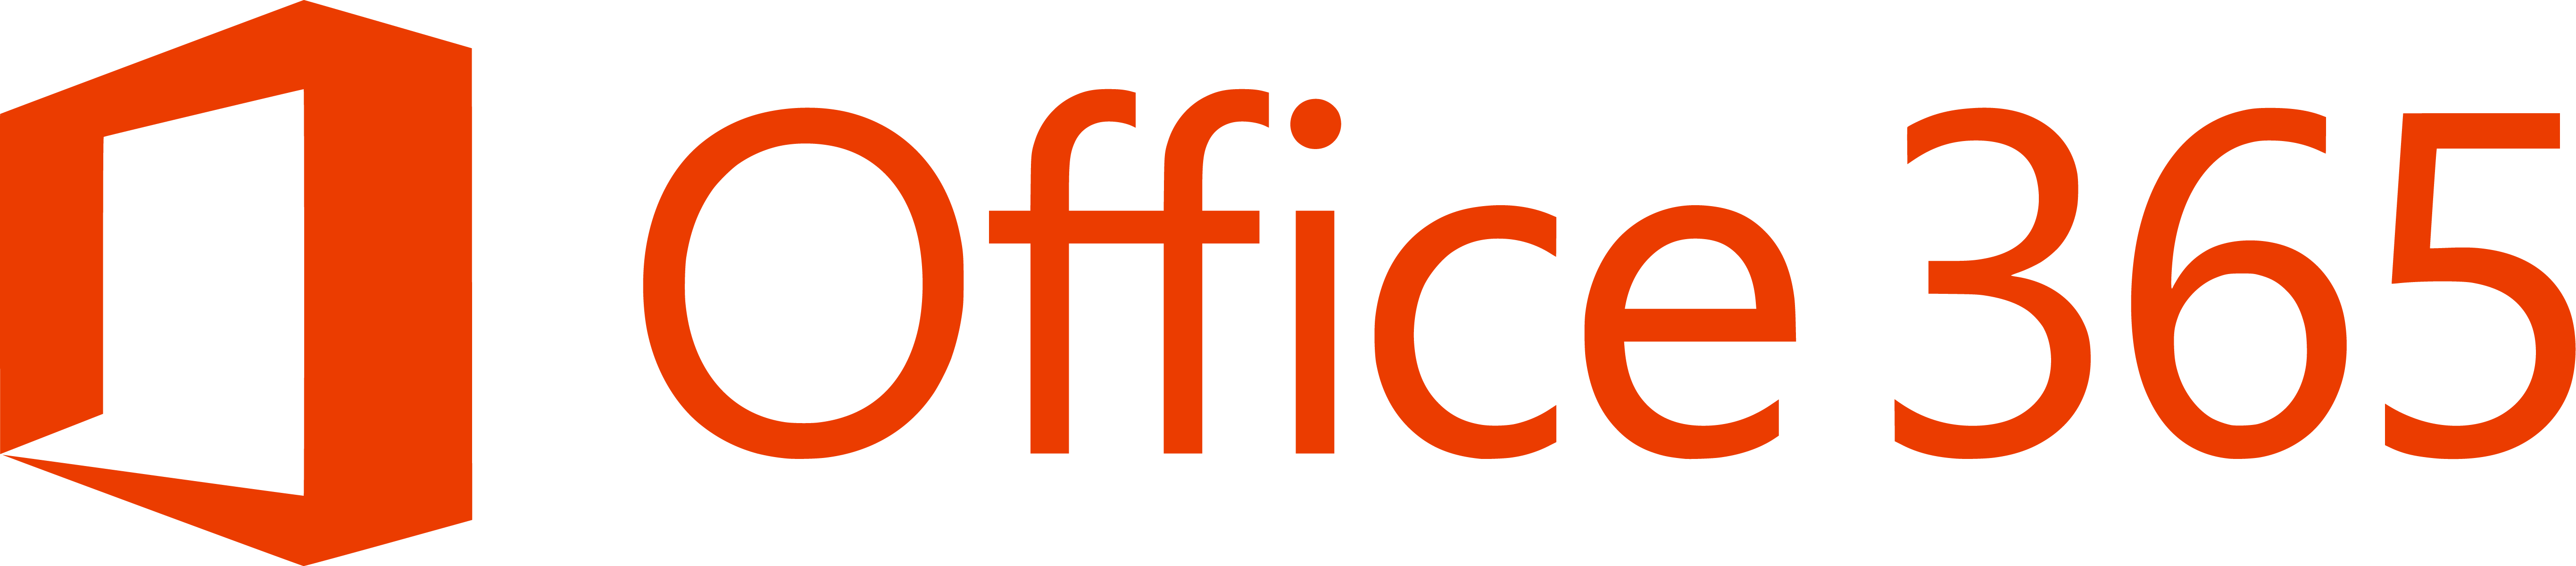 Office 365 logo (1)